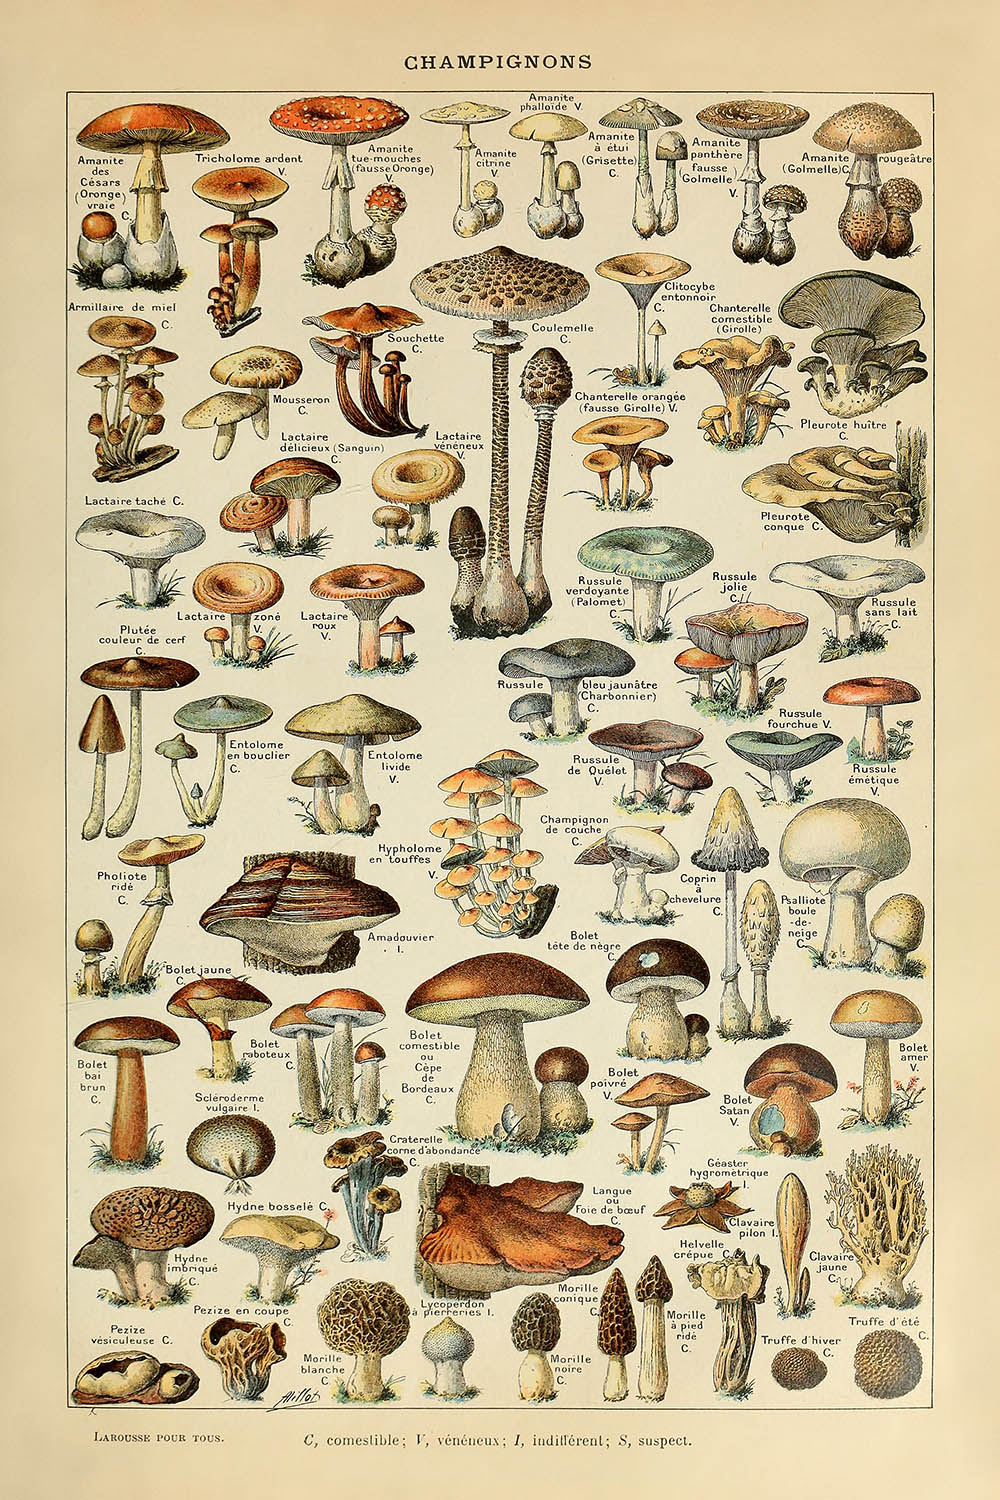 Champignons von Adolphe Millot, 1890